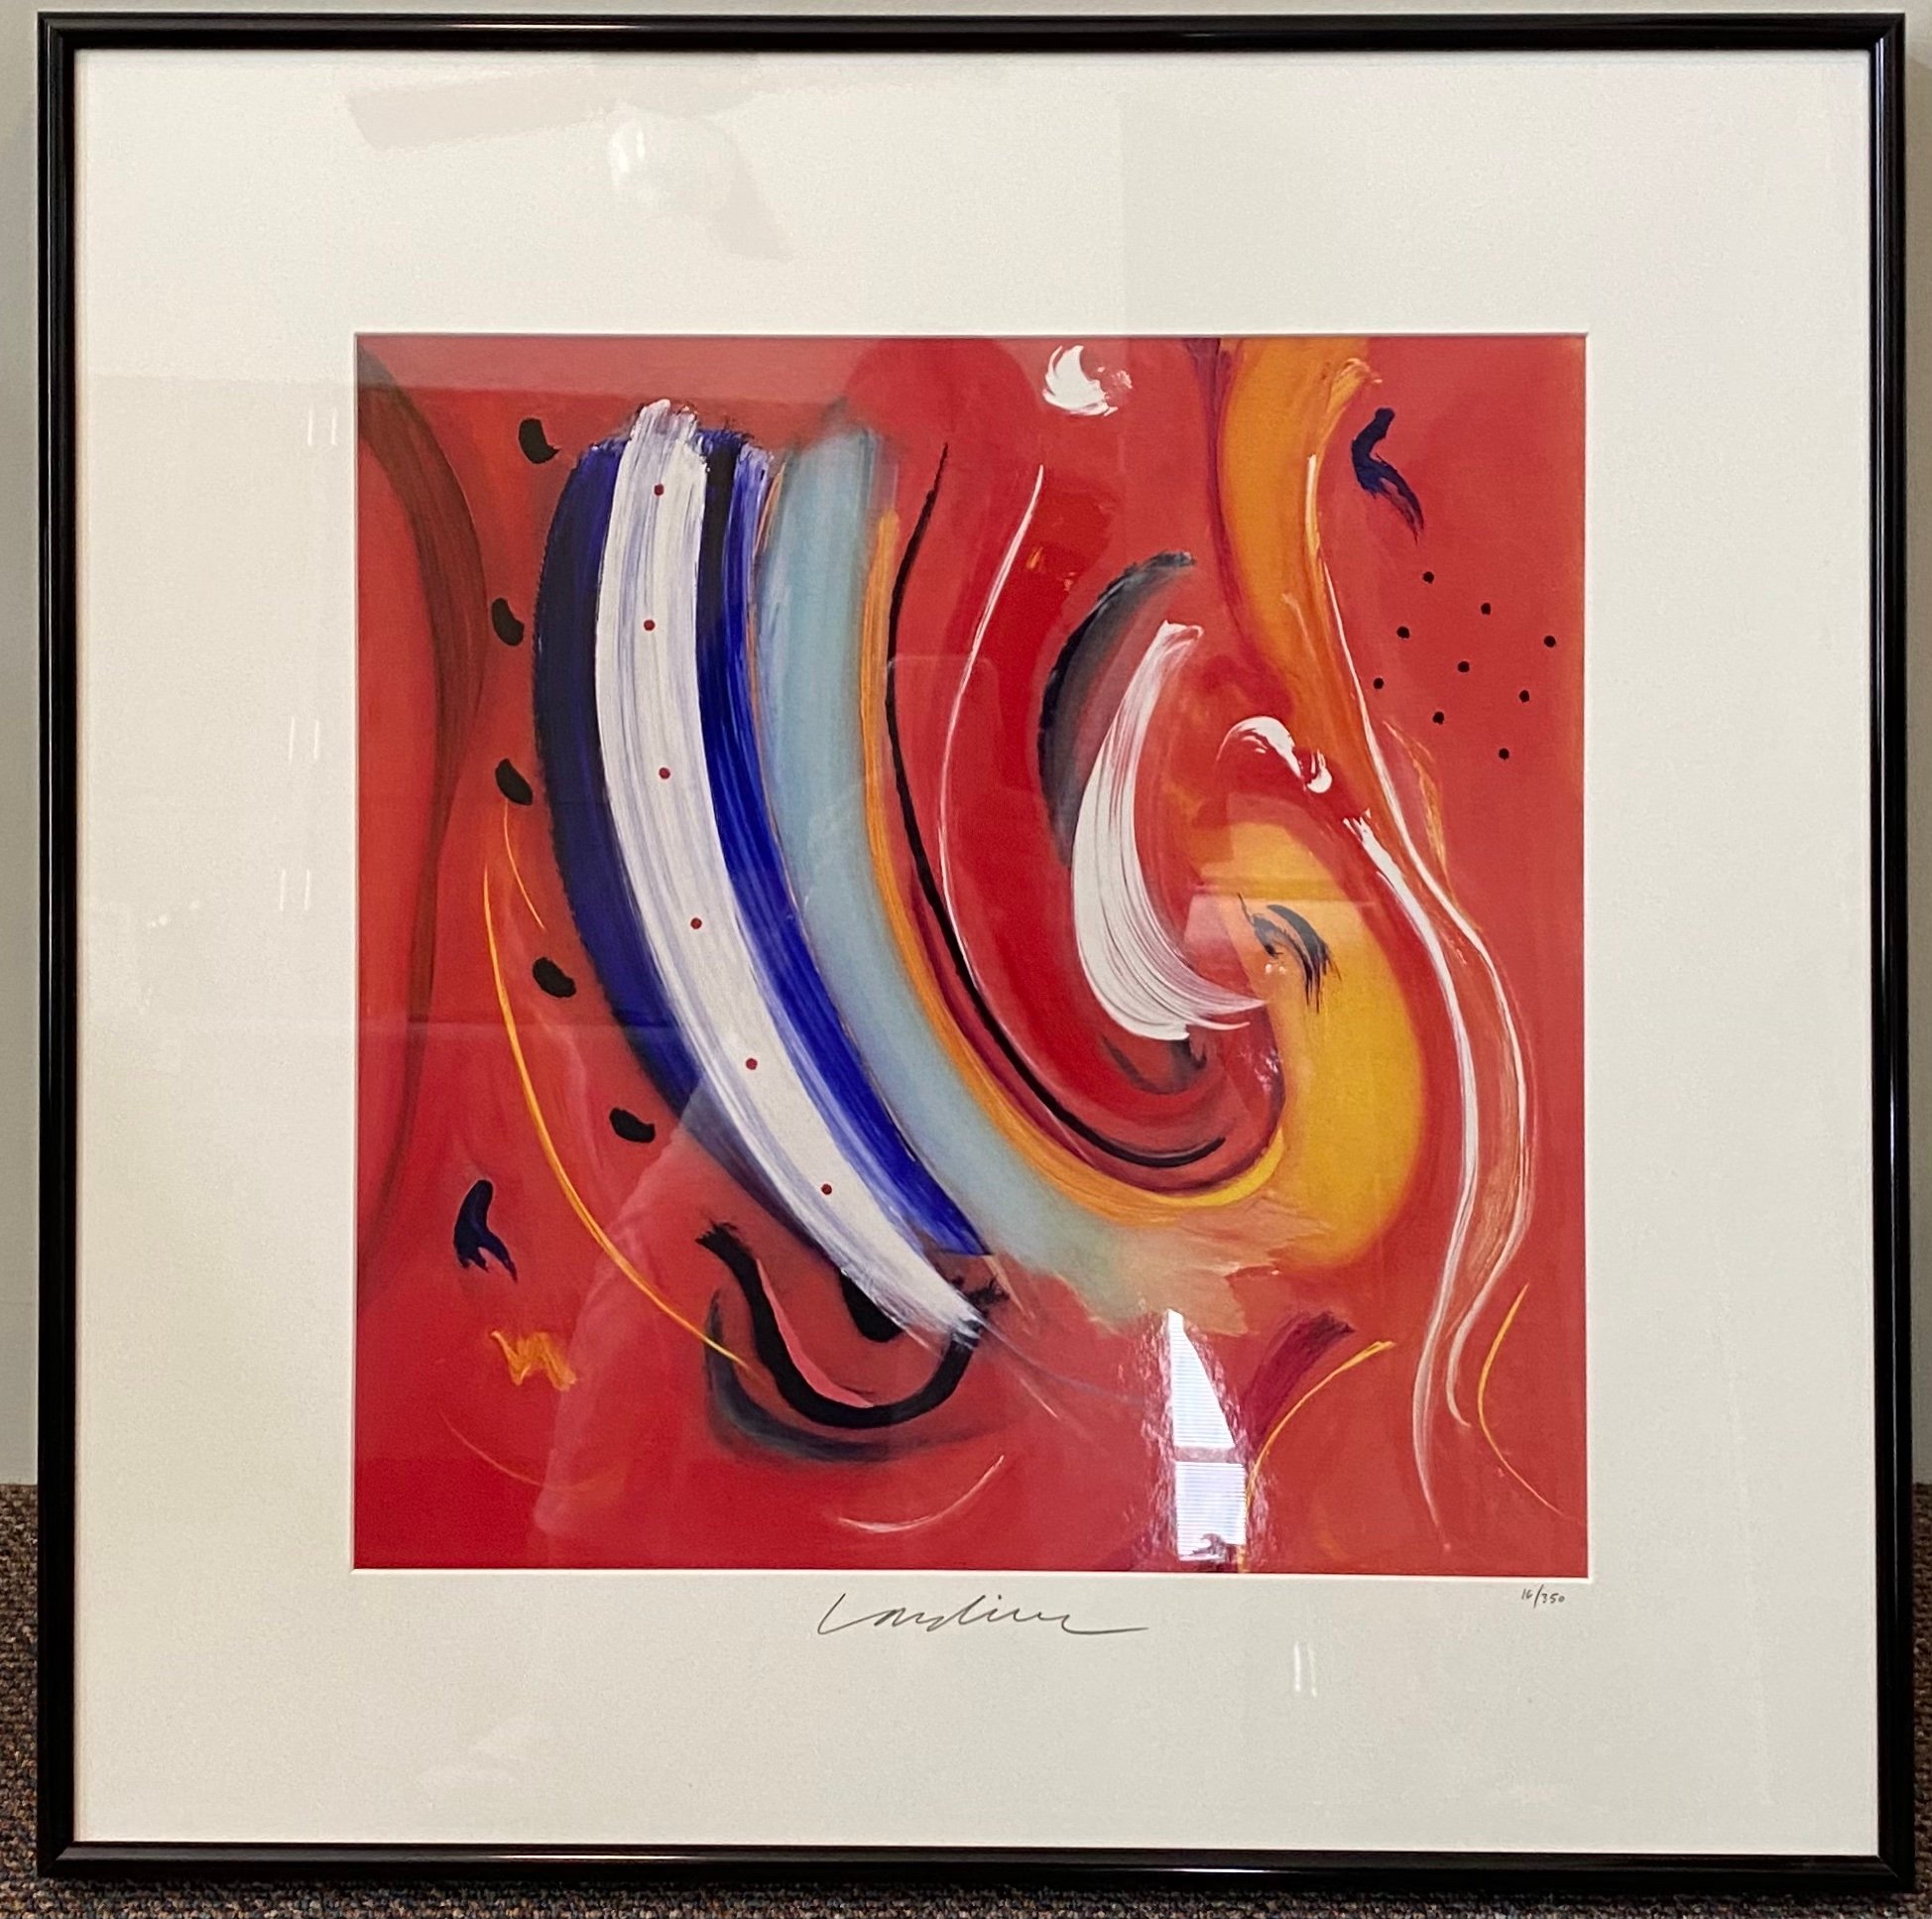 Geoffrey Lardiere
River of My Soul
Lithograph
17” X 17”
$645.
SOLD
